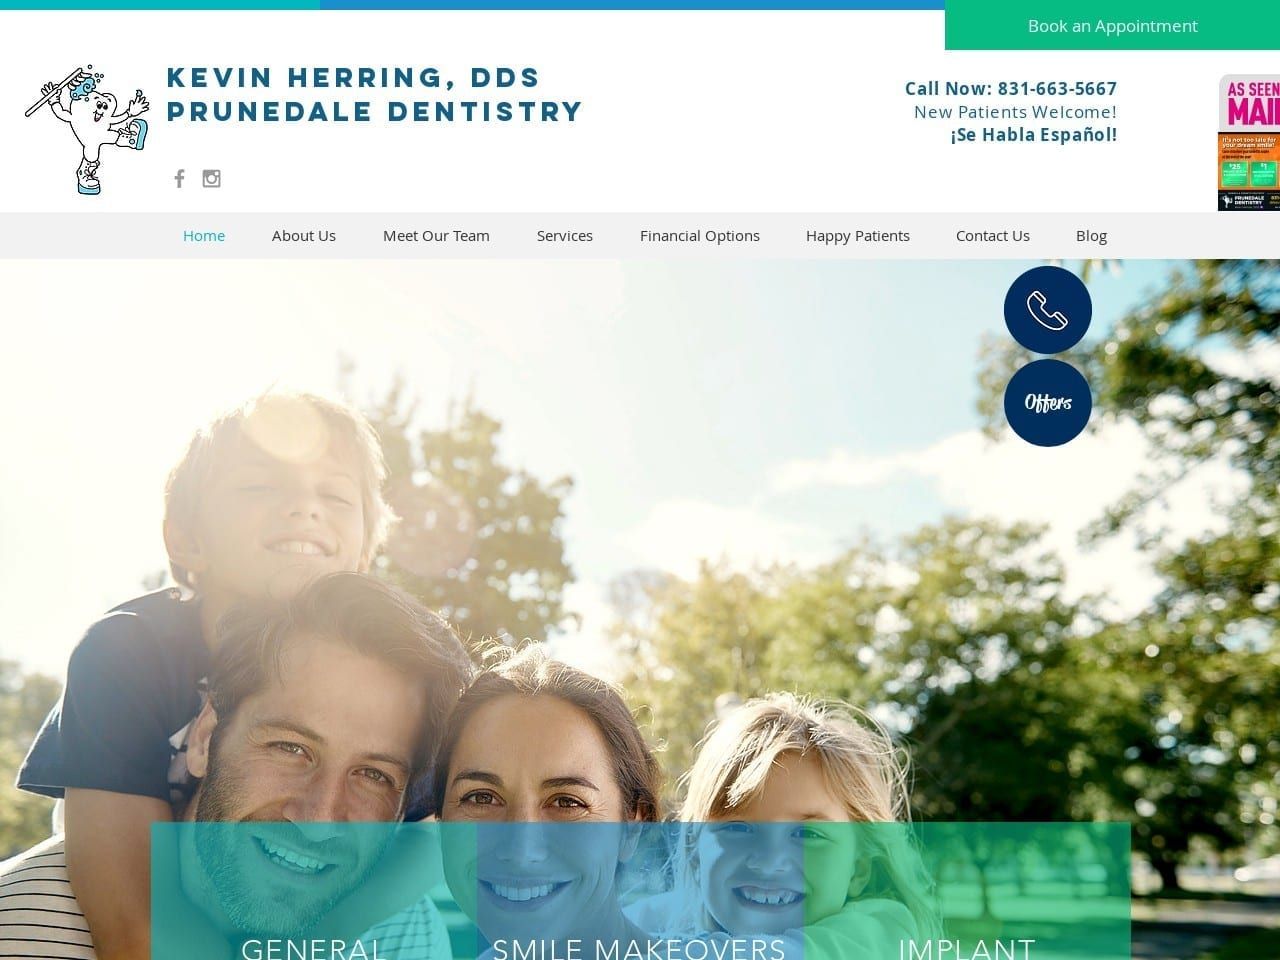 Kevin Herring DDS Website Screenshot from drkevinherring.com